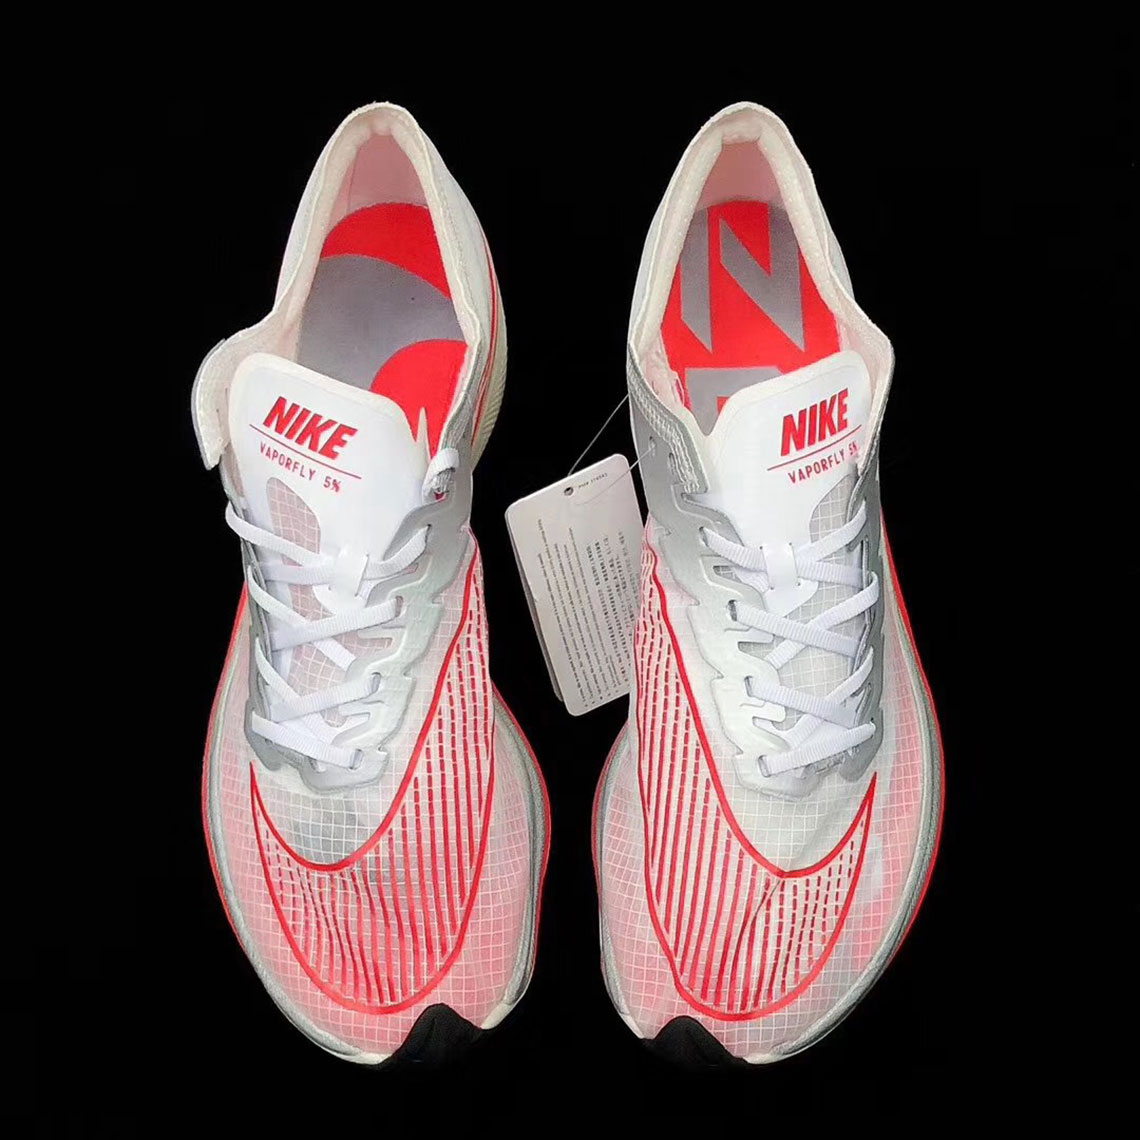 Nike Zoom Vaporfly University Red Release Info | SneakerNews.com